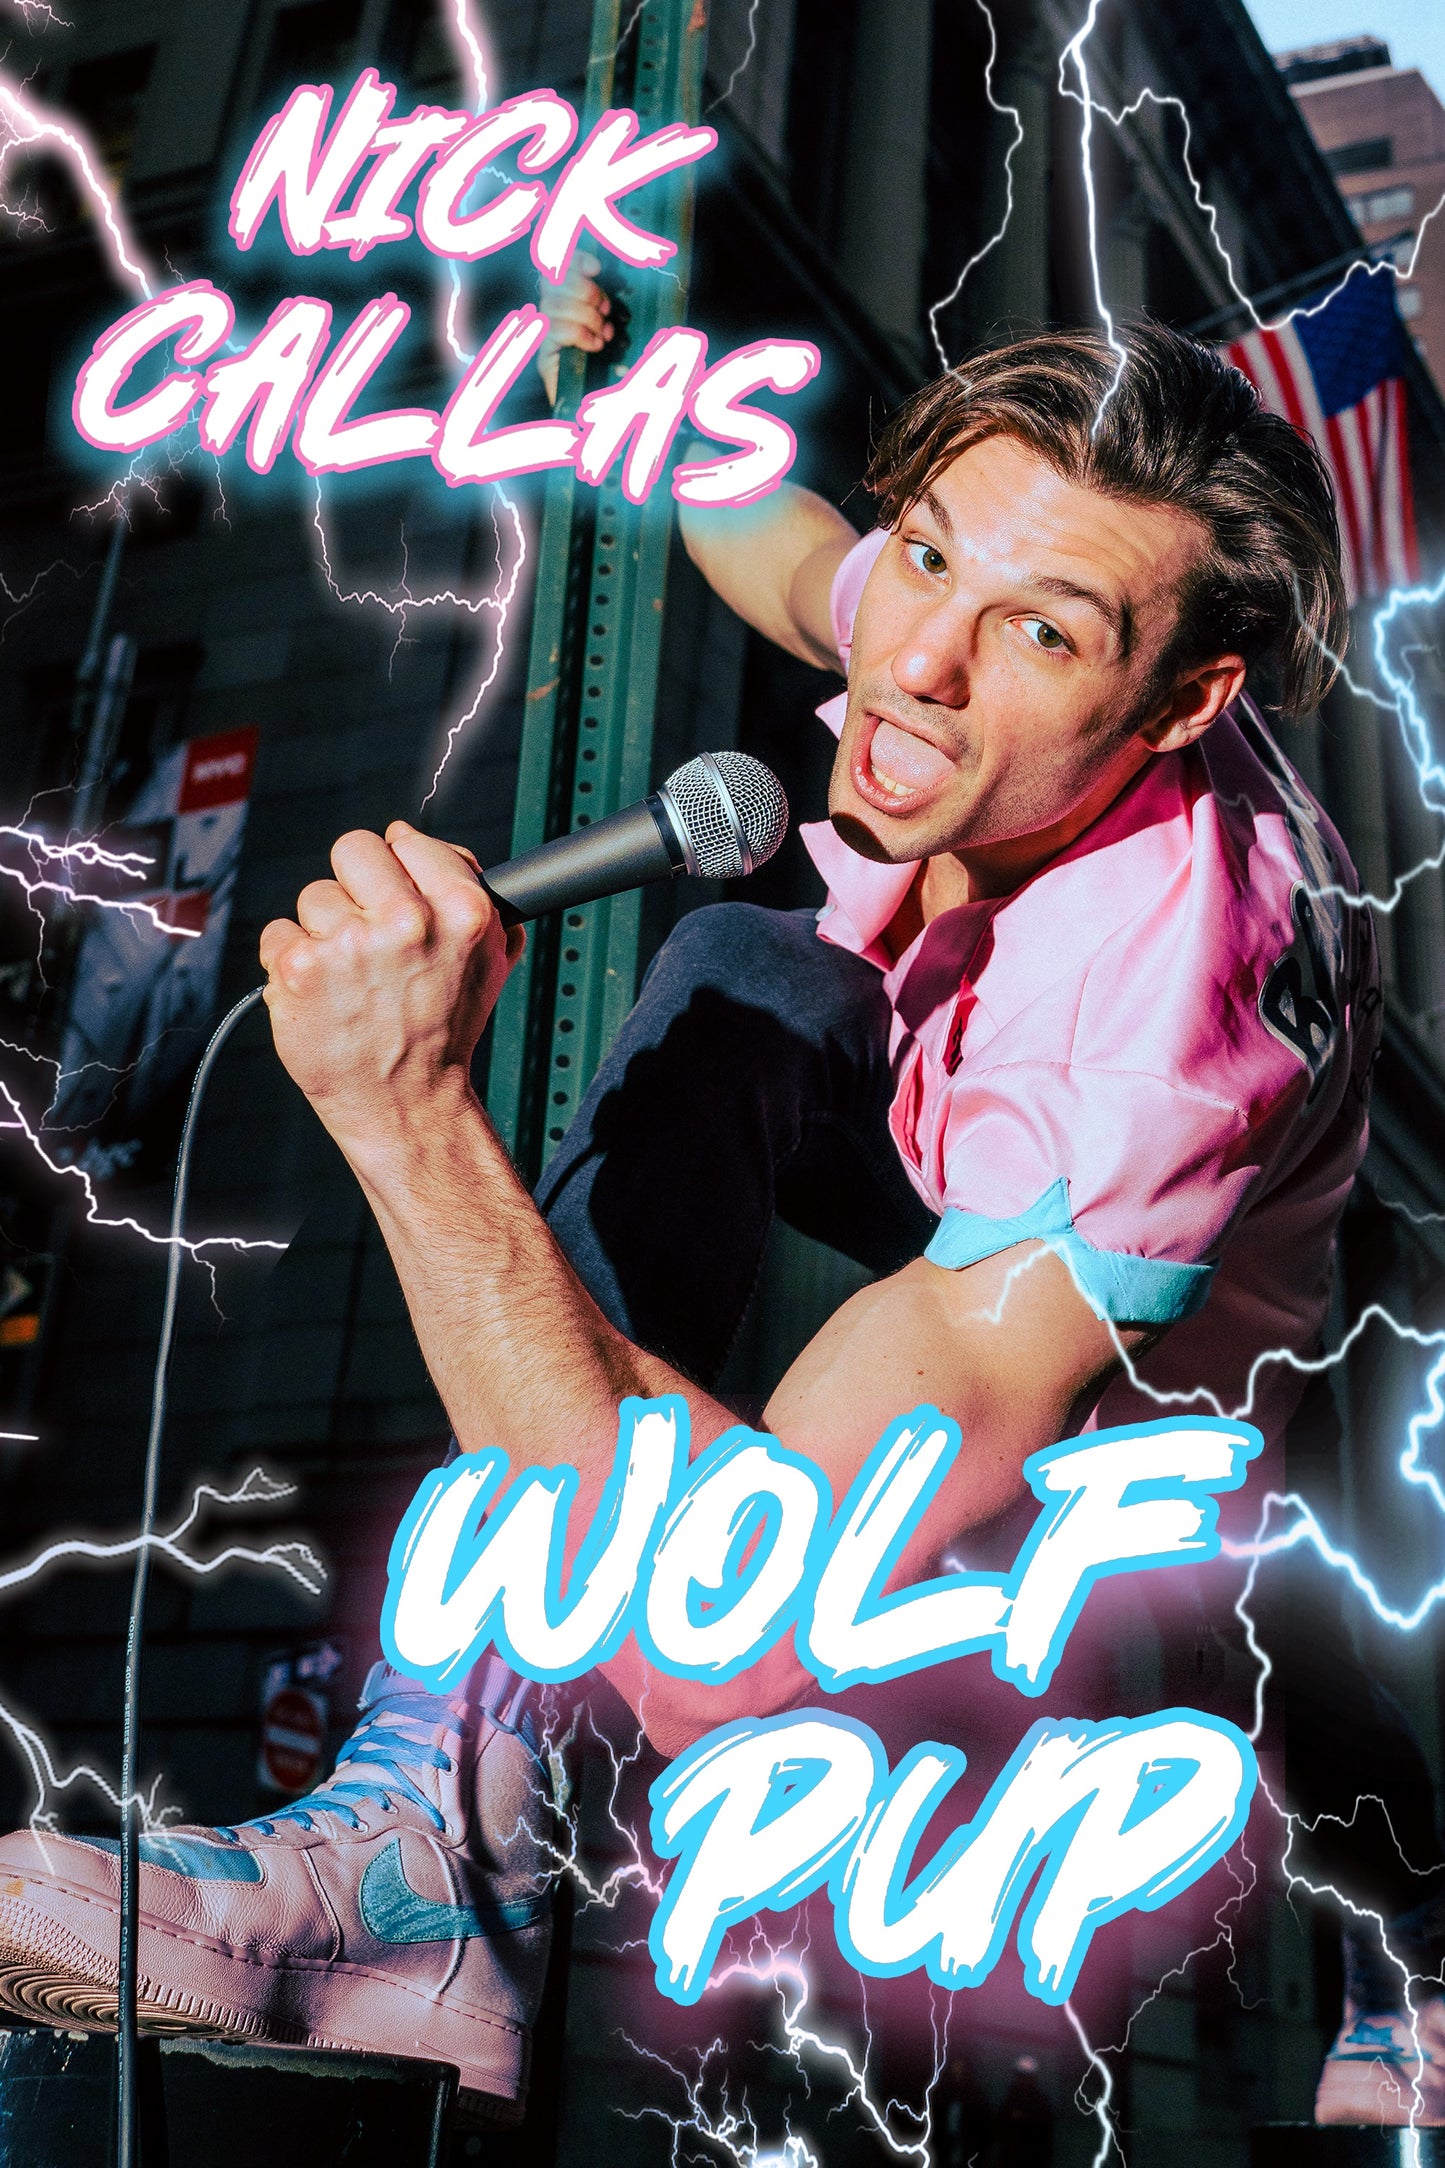 Nick Callas - Wolf Pup